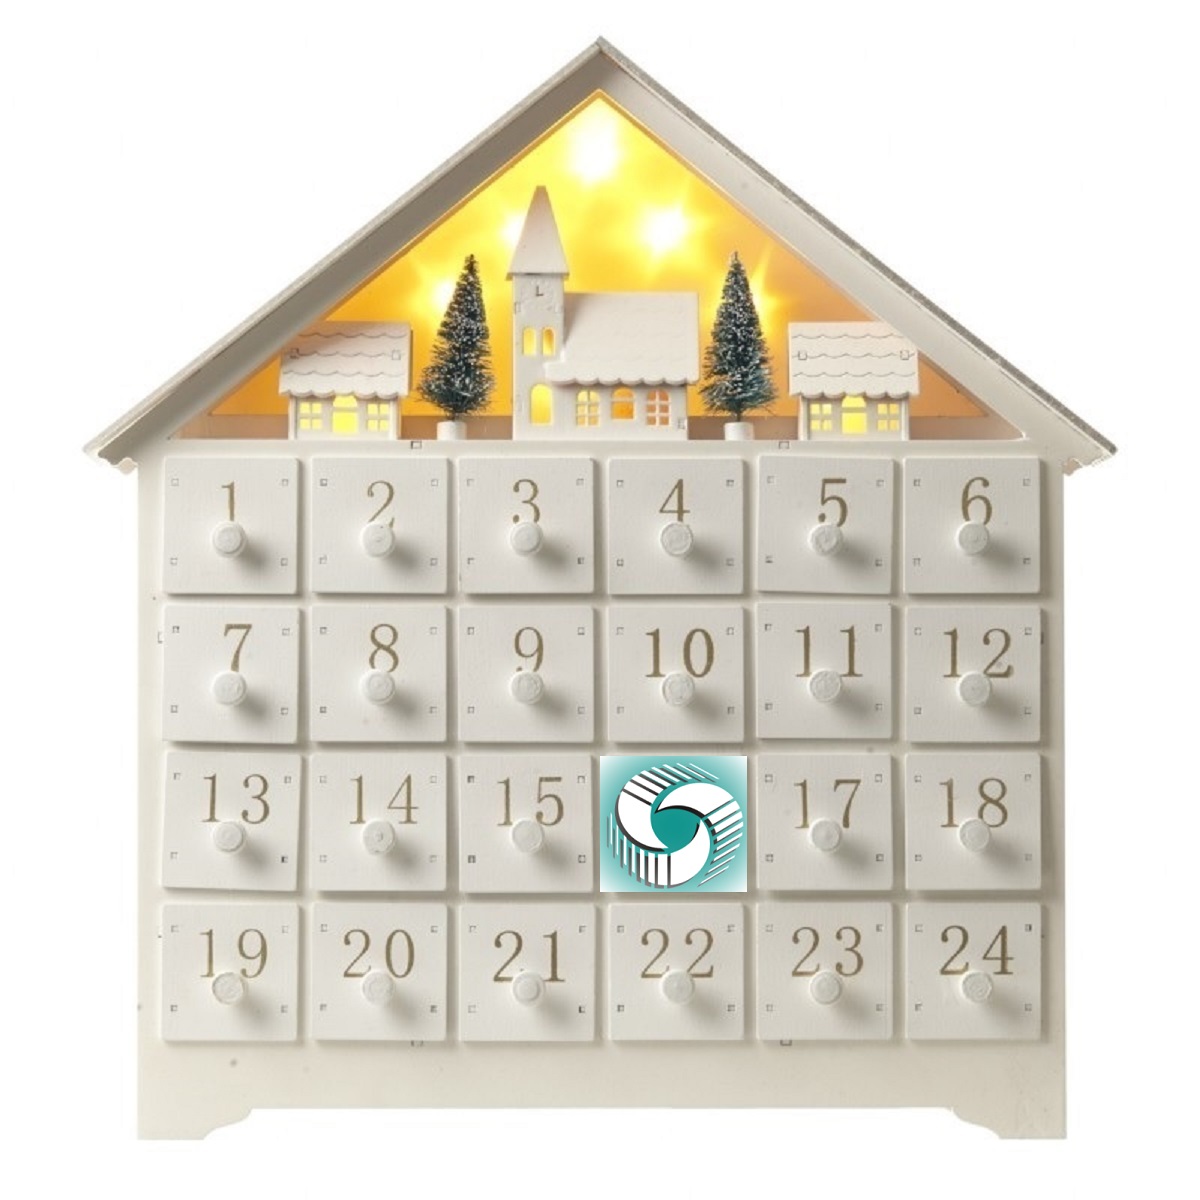 Day 16 – Frontier’s Advent Calendar